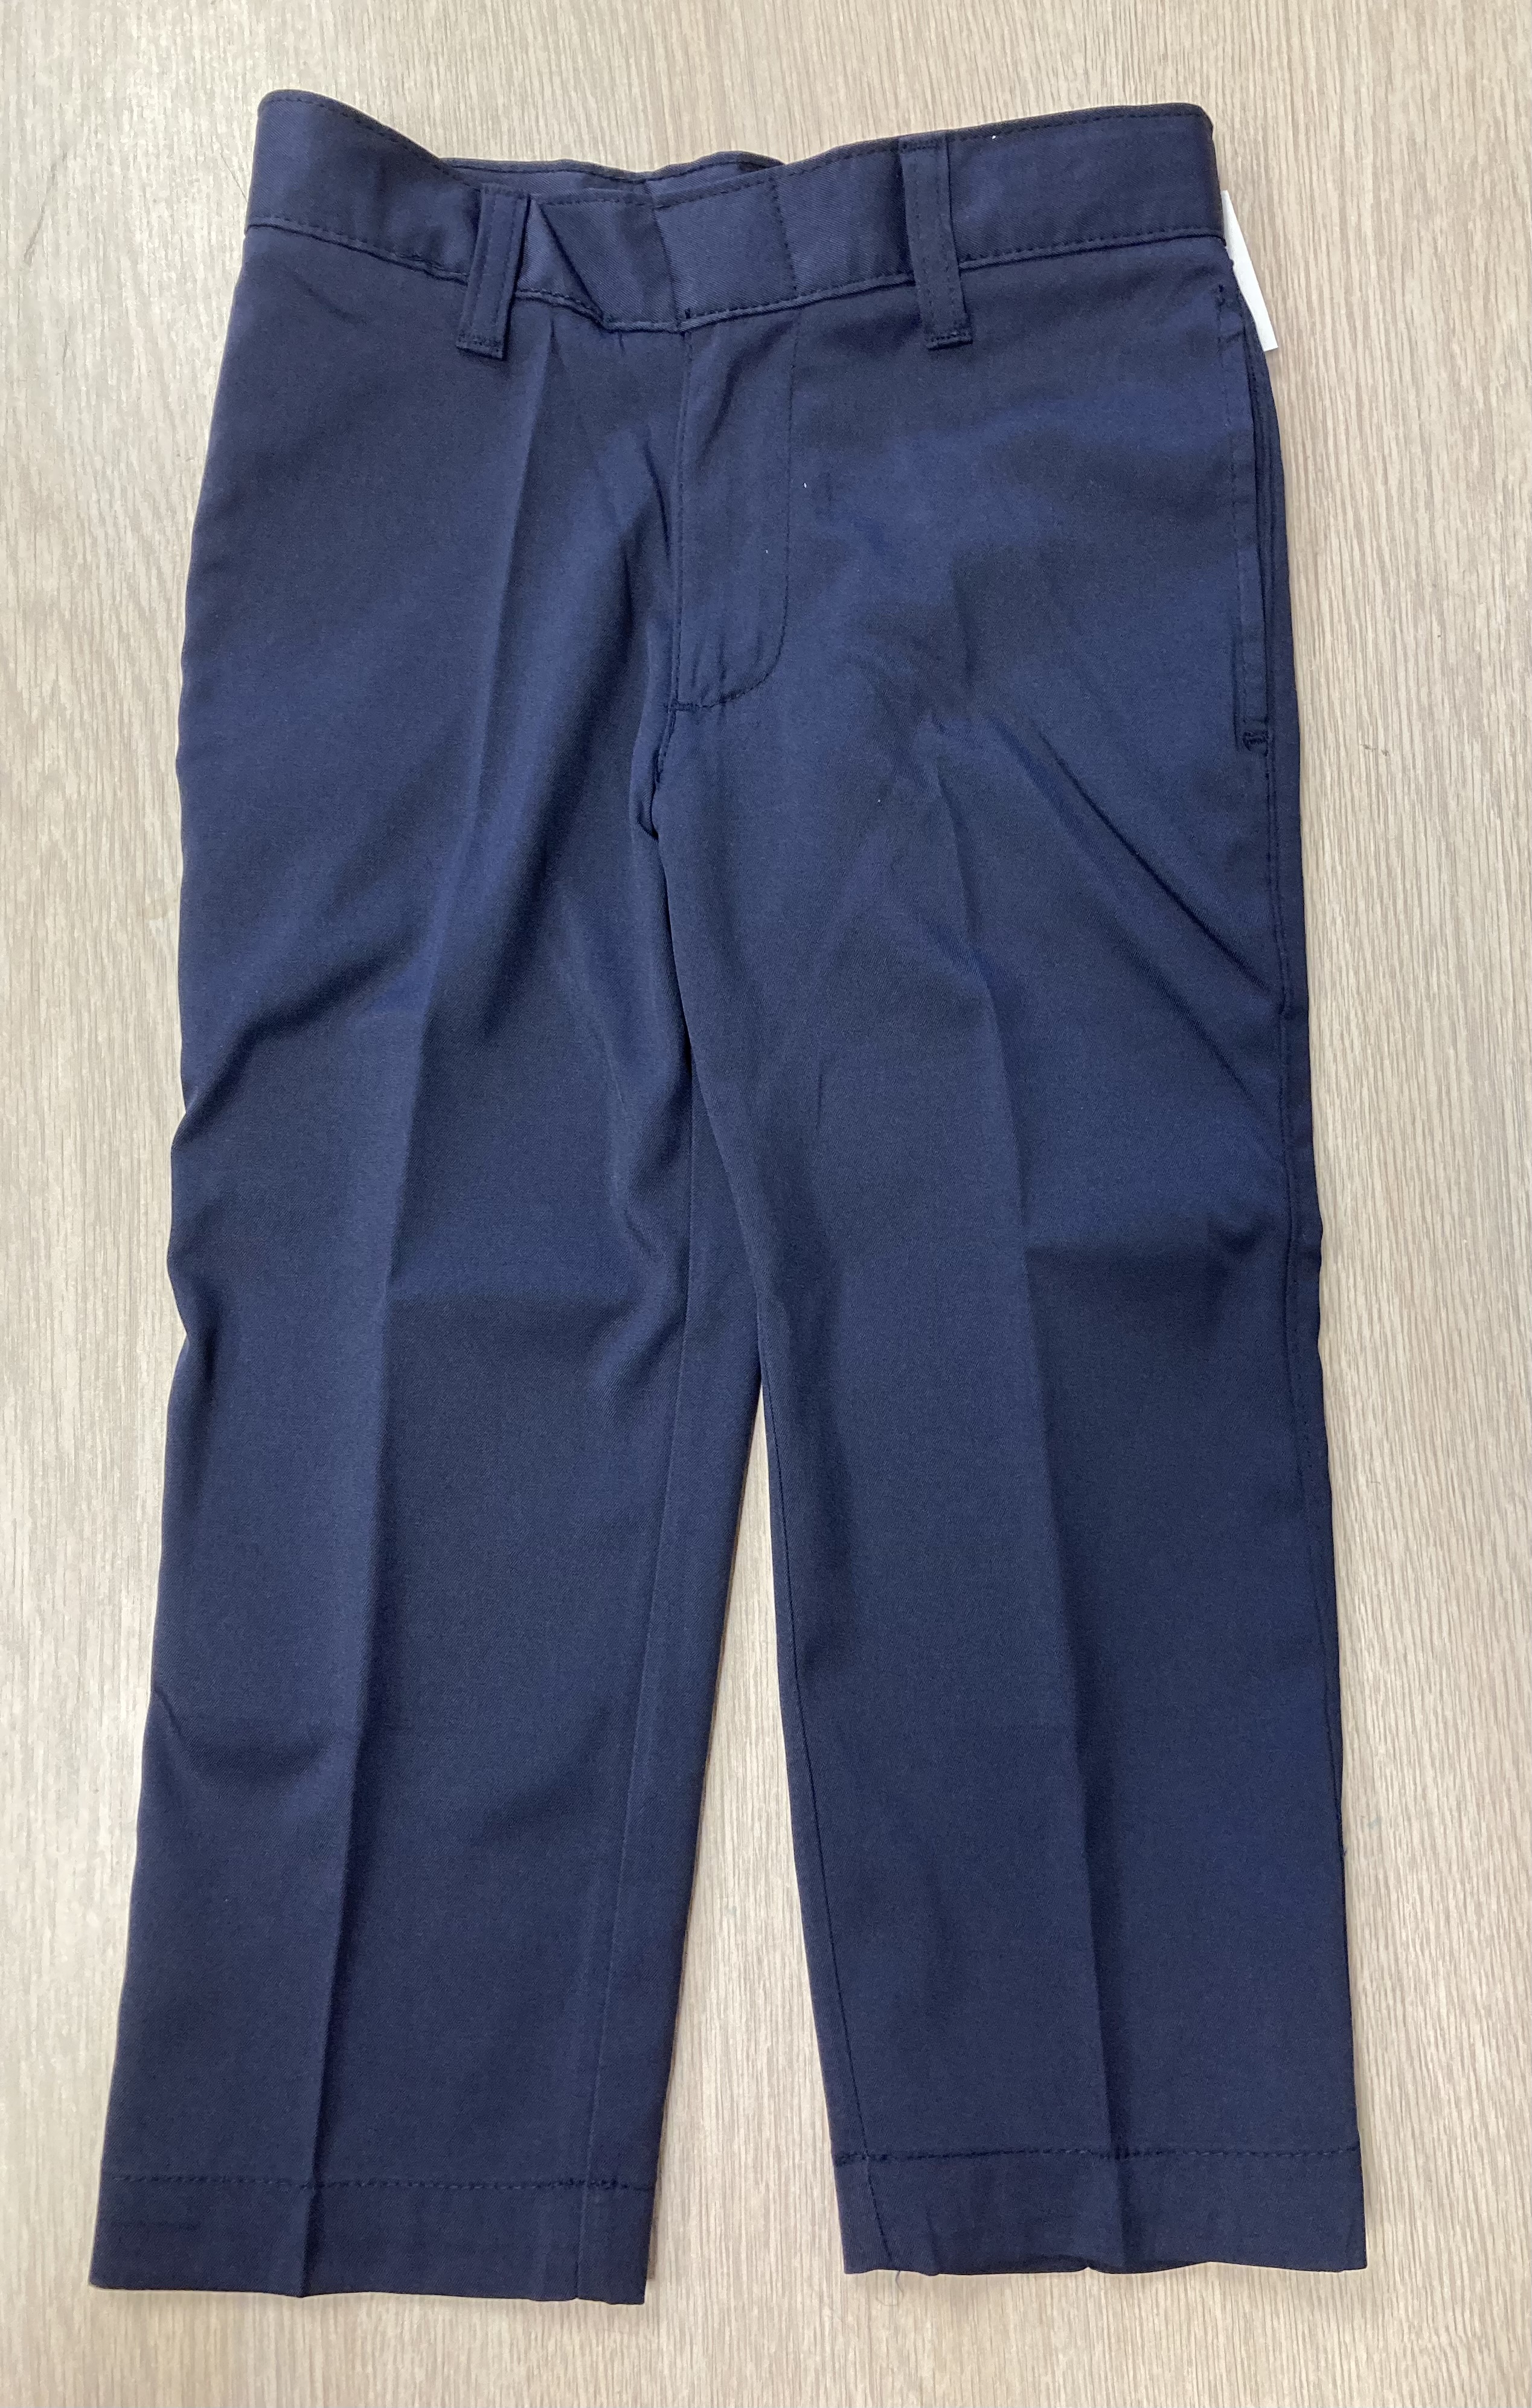 St Ann Dri Fit Husky Pants - $45.00 : Renegades Sportswear